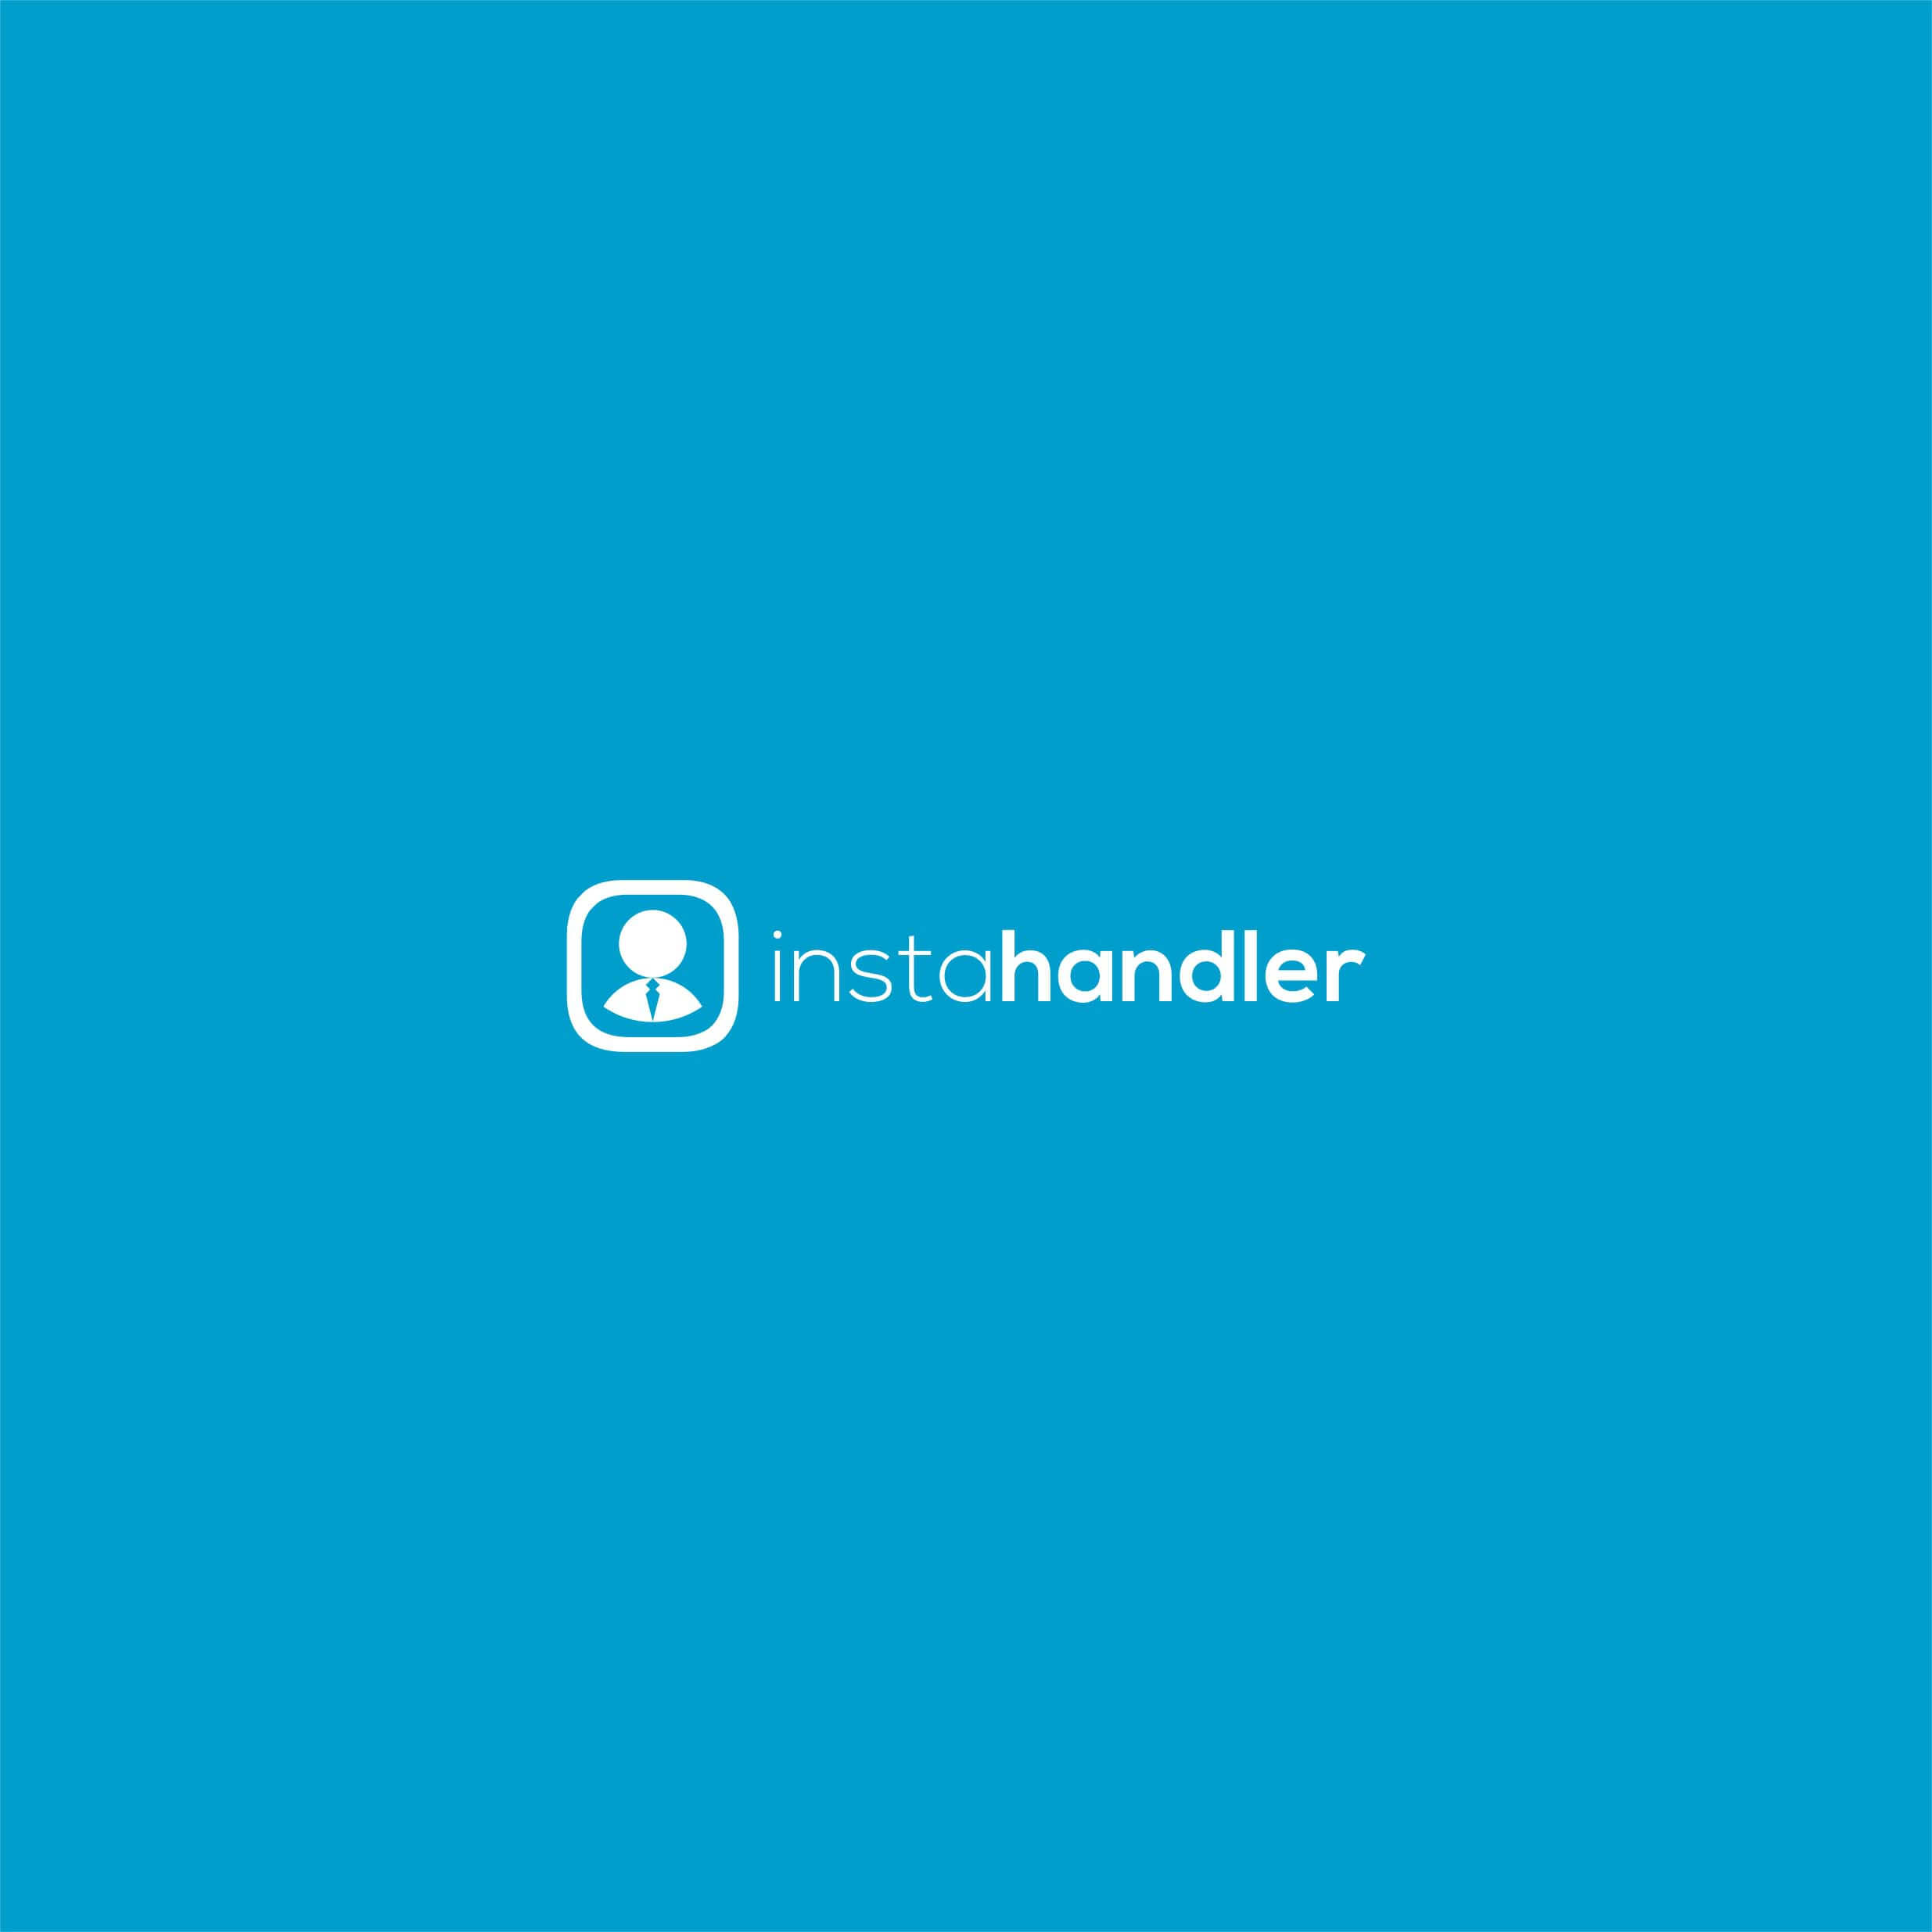 InstaHandler Logo Design - Web Application For Instagram